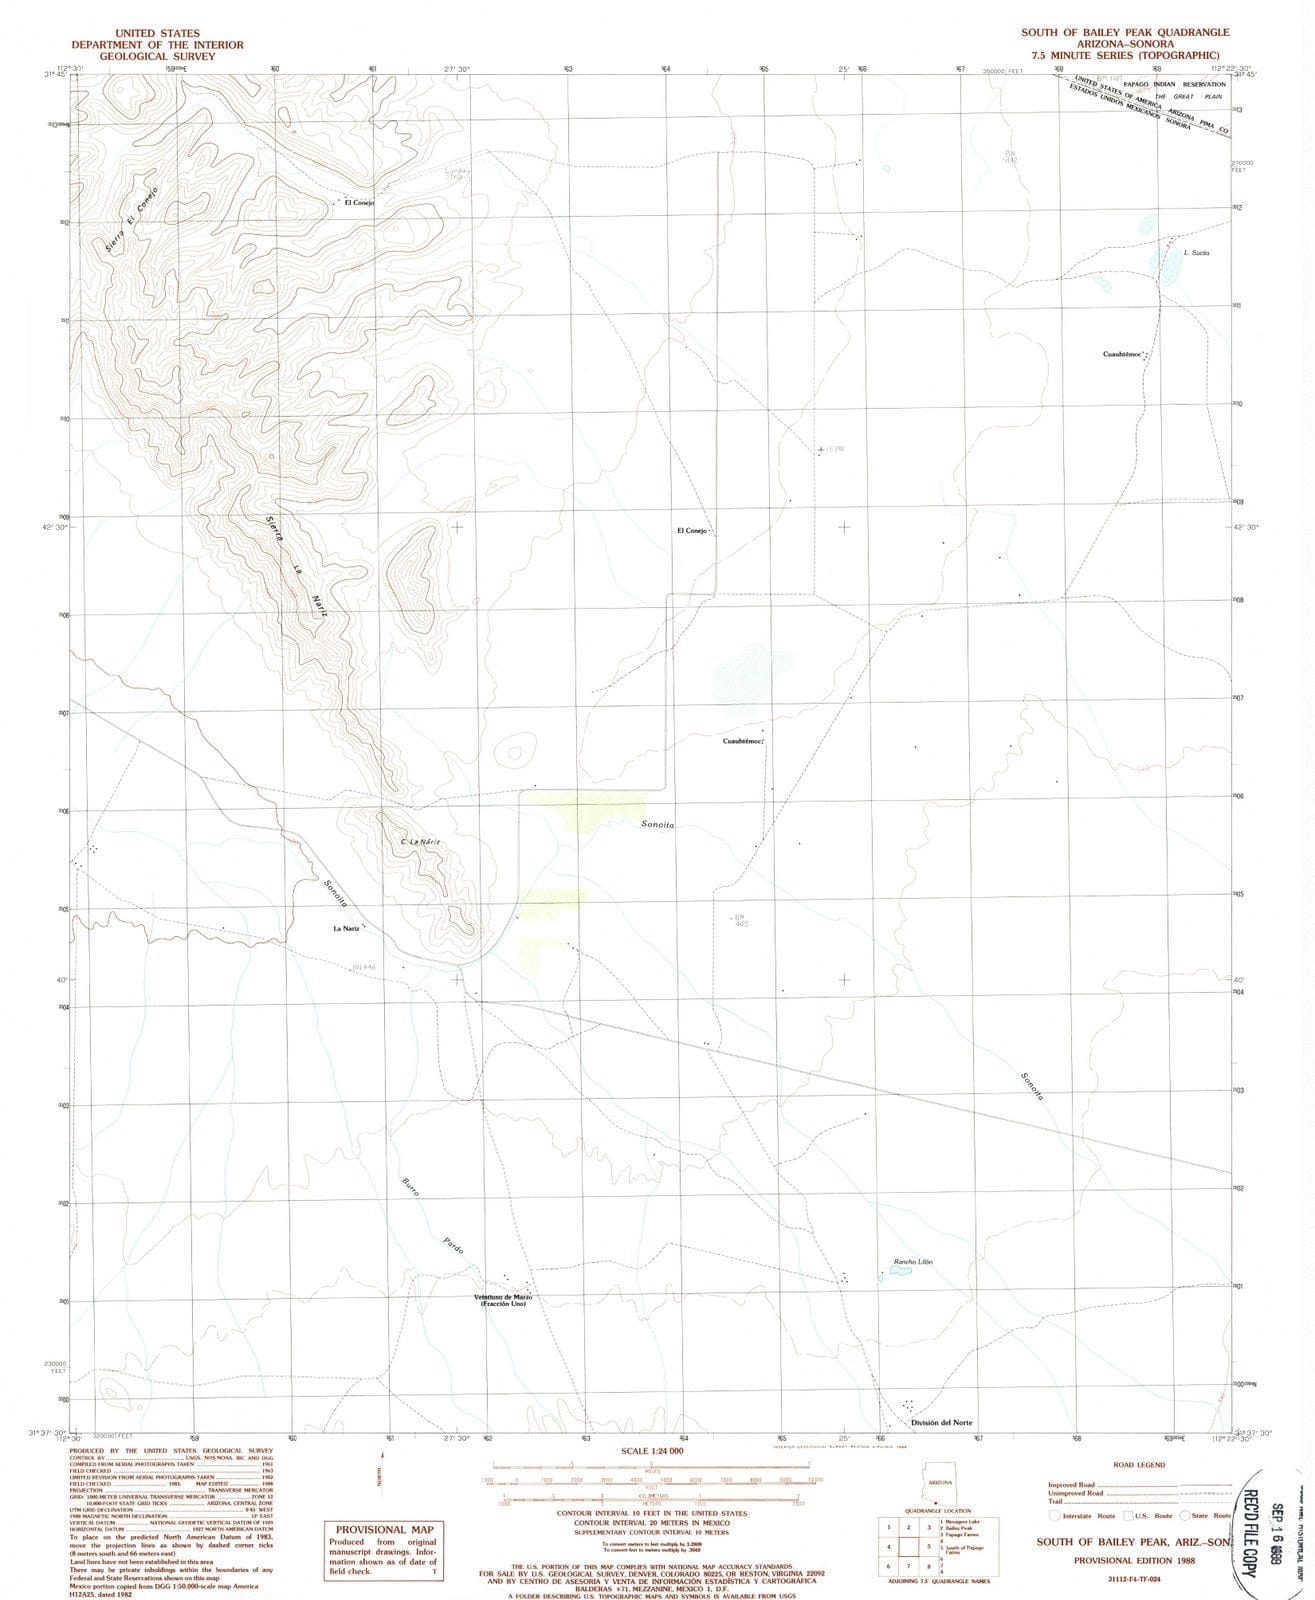 1988 South of Bailey Peak, AZ - Arizona - USGS Topographic Map